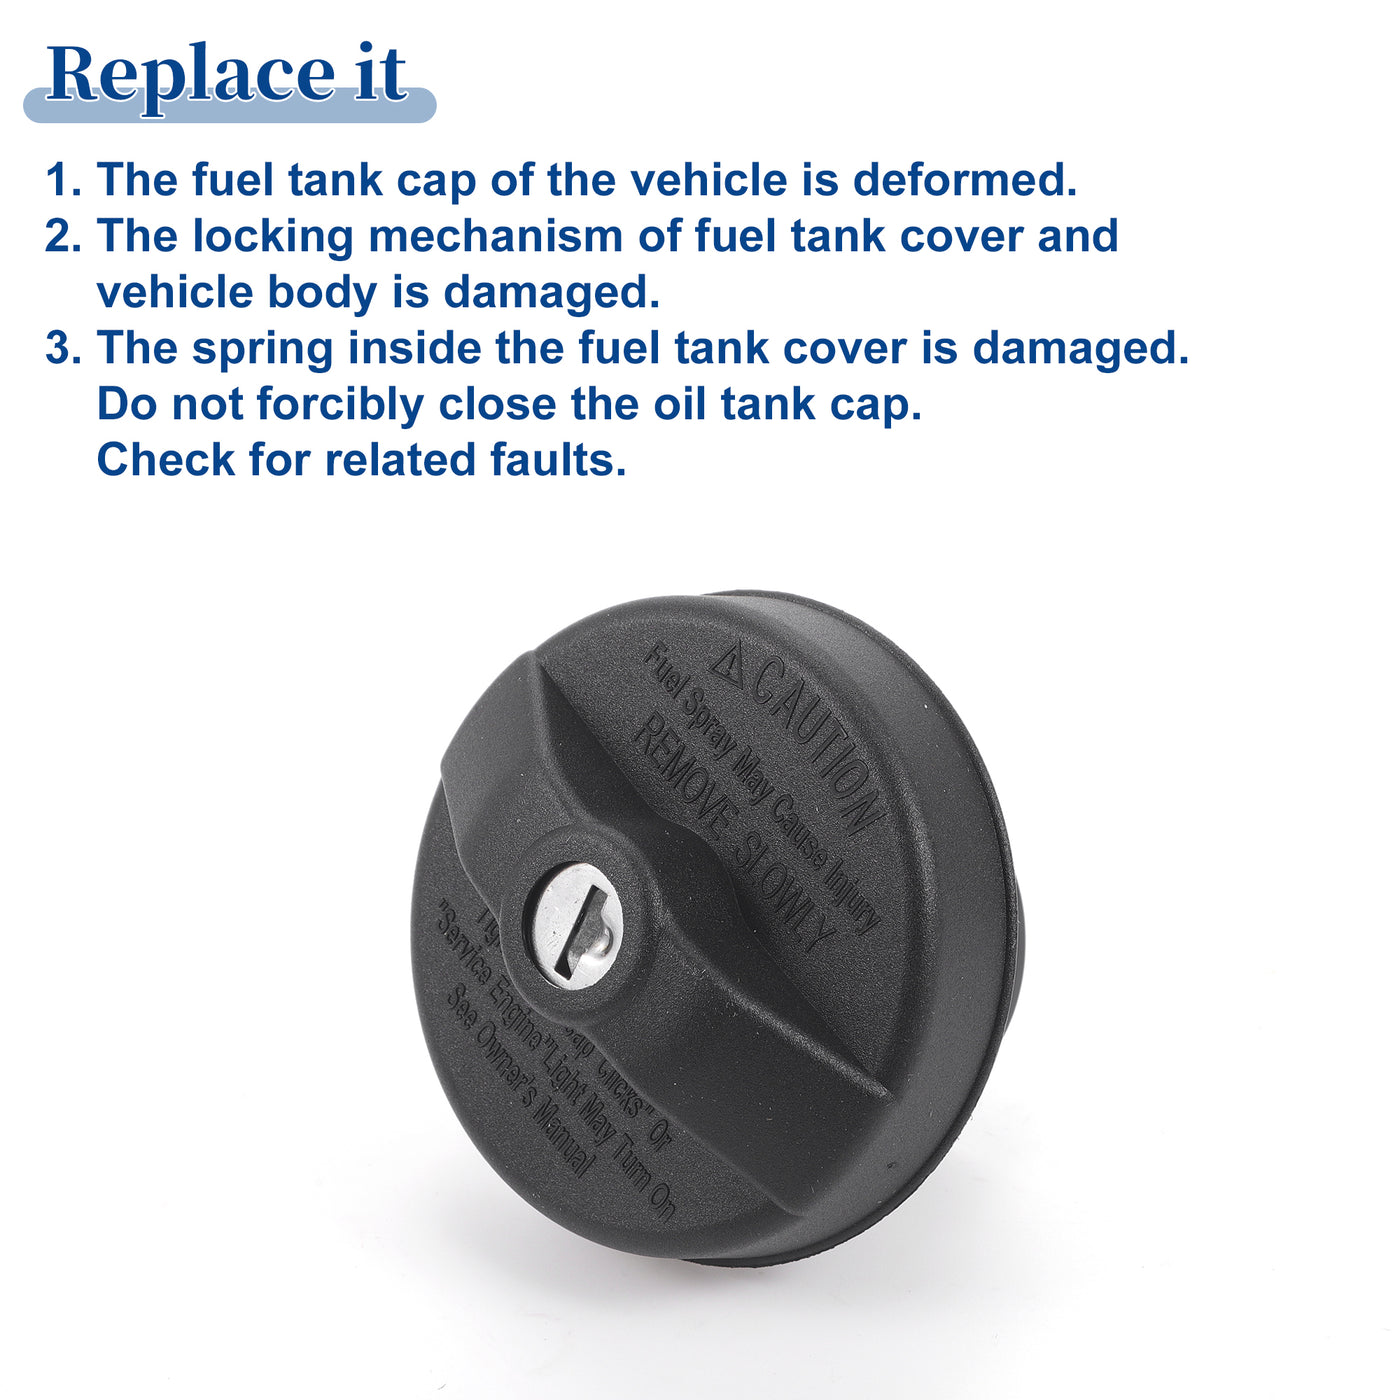 ACROPIX Plastic Locking Gas Cap Lock Fuel Tank Cap Black Fit for Toyota Camry Corolla RAV4 with Keys No.52100239/82202338 - Pack of 3